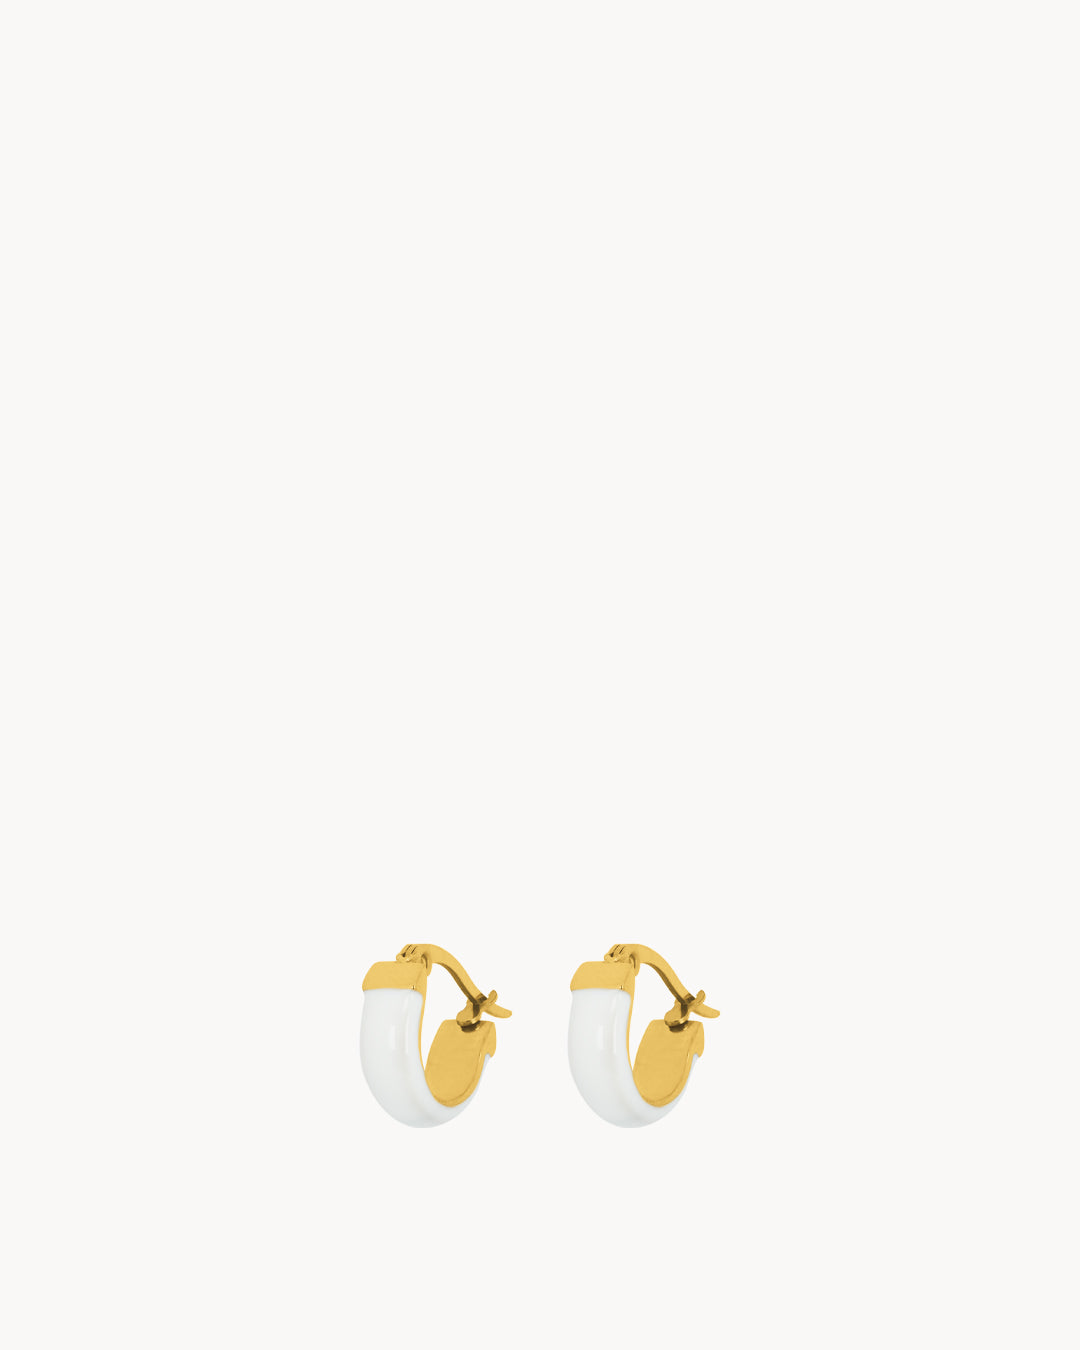 White Dainty Hoop Earrings, Gold